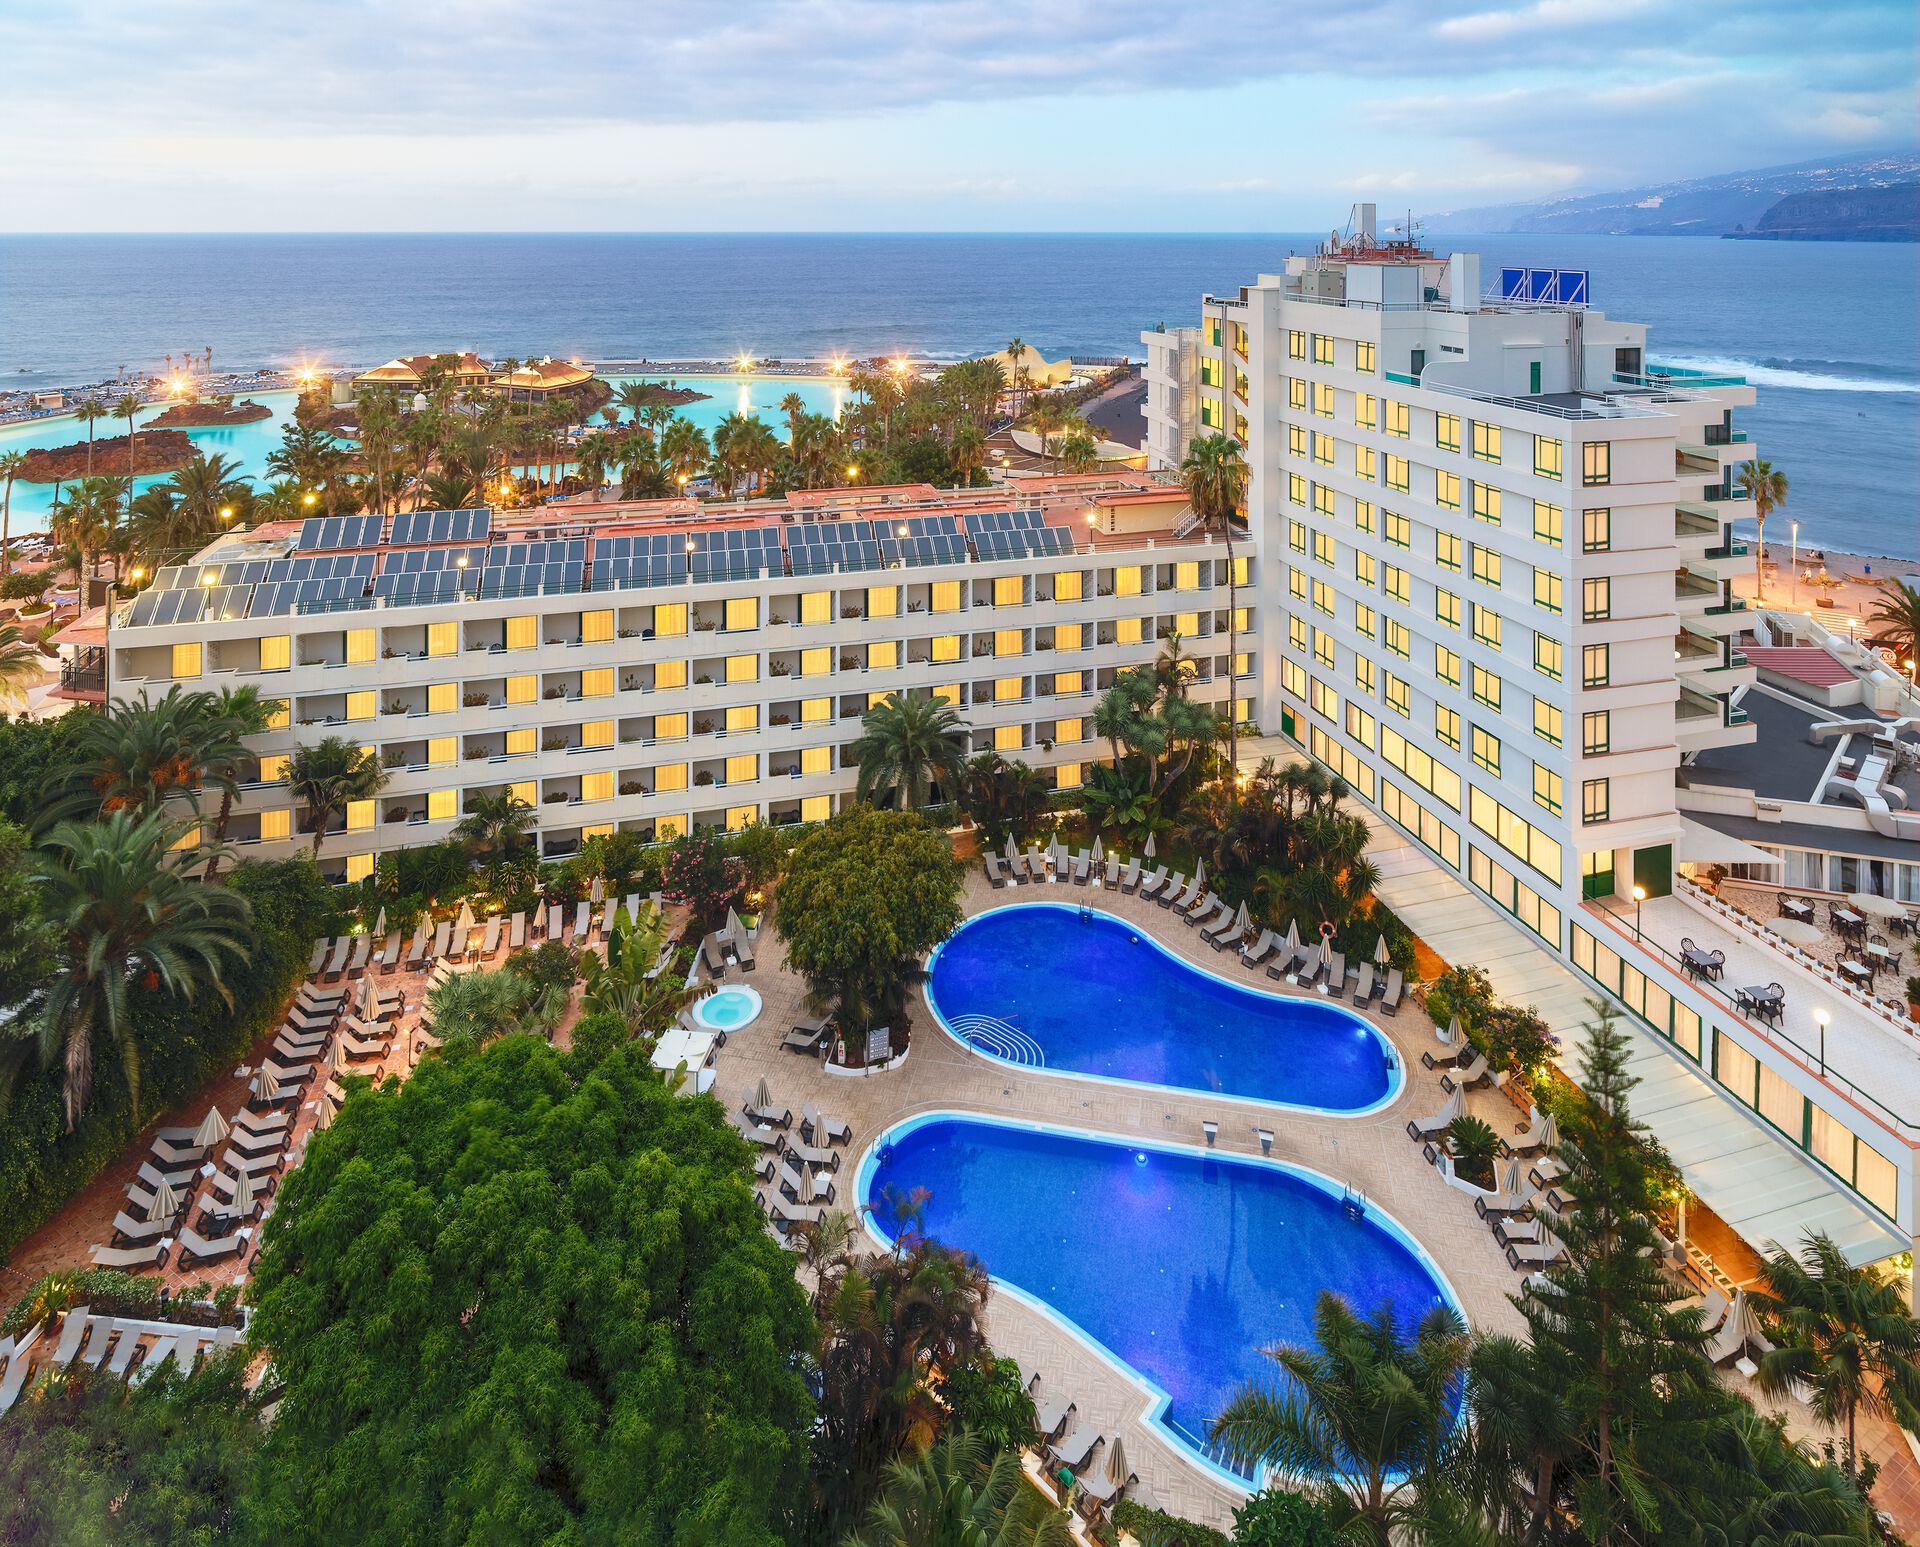 Hotel H10 Tenerife Playa - 4*